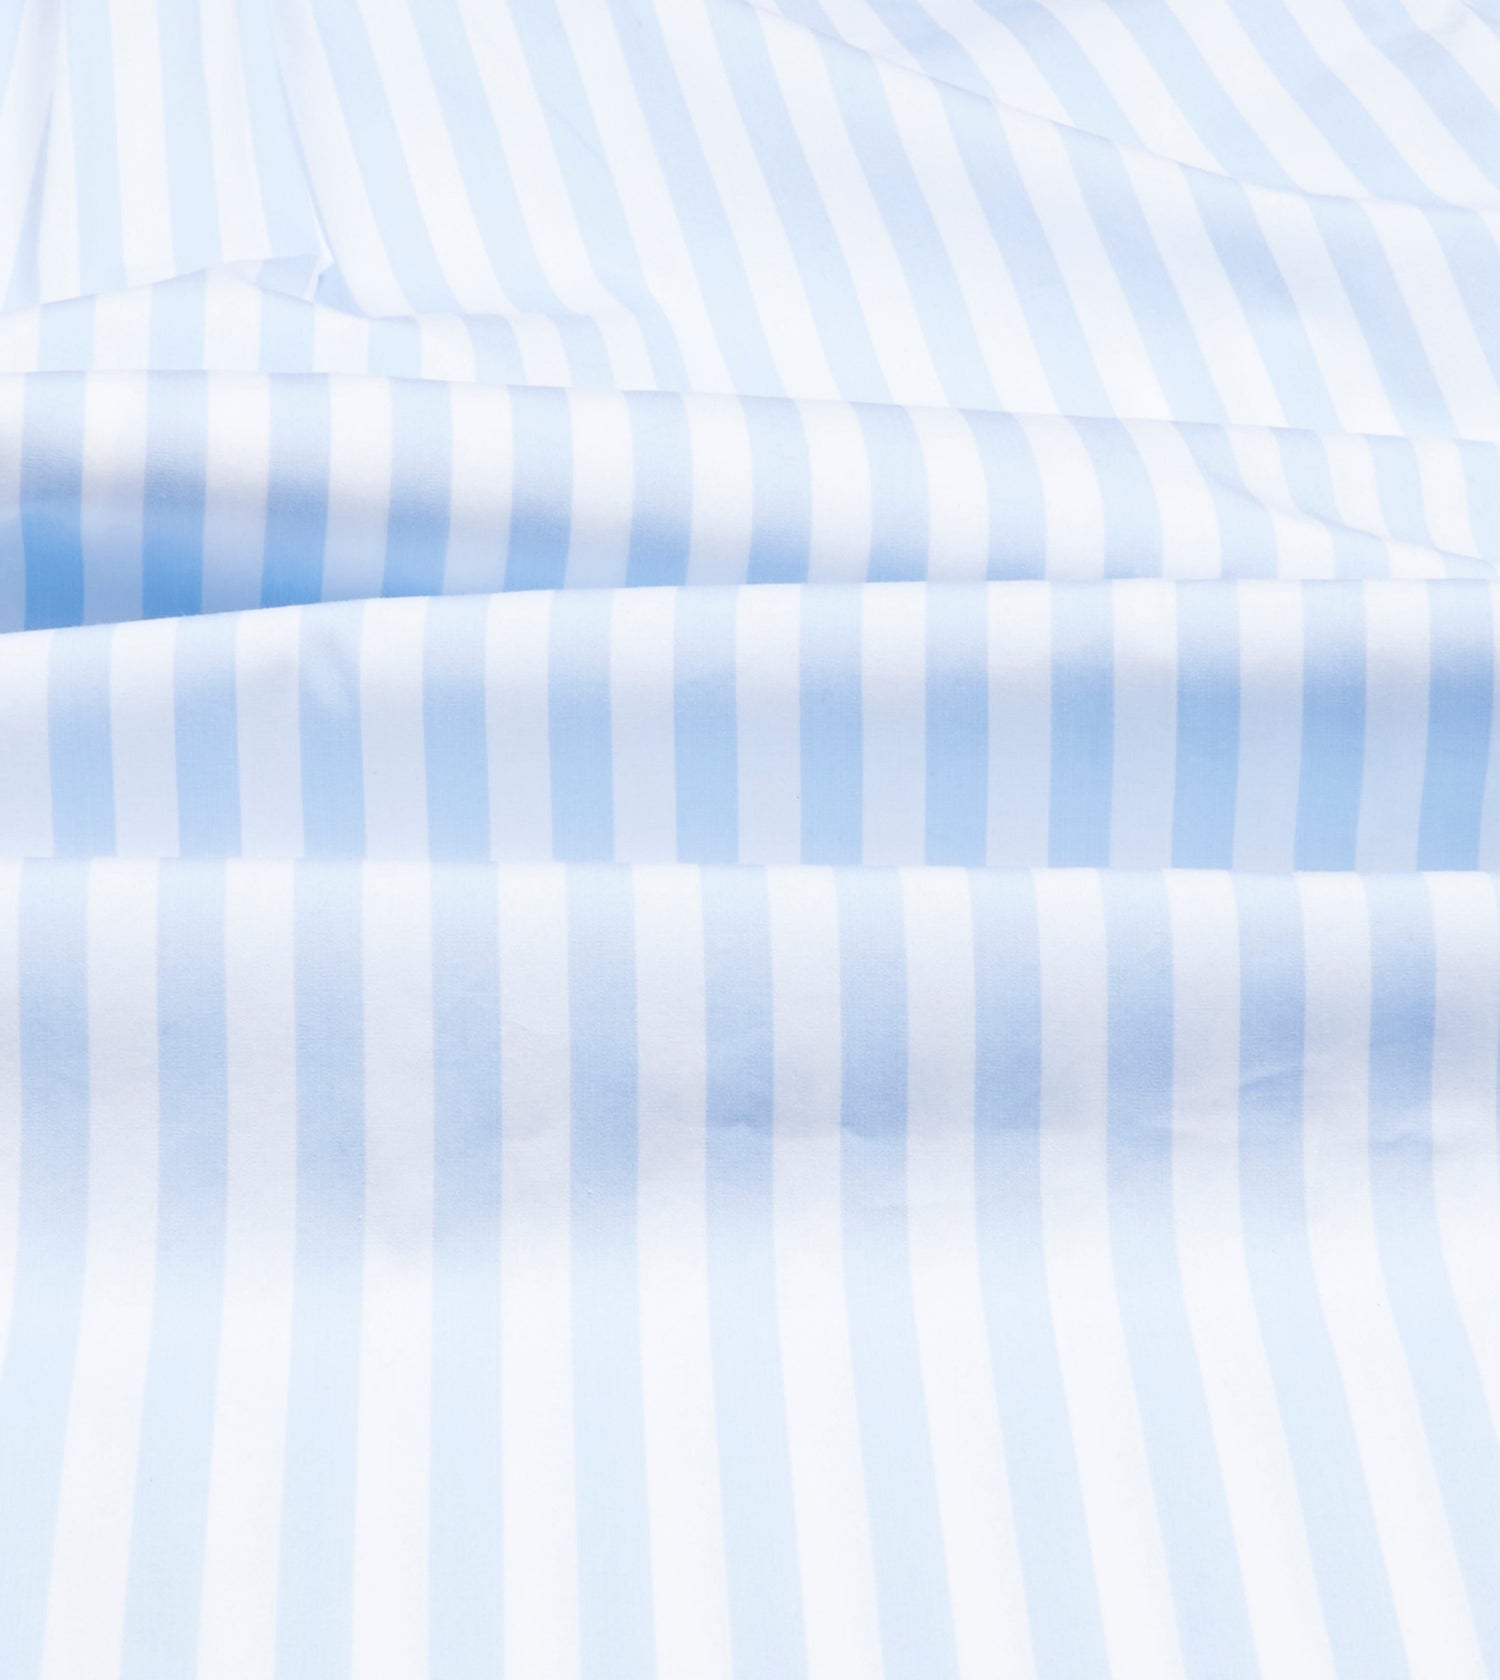 Blue Broad Stripe Cotton Poplin Button-Down Shirt